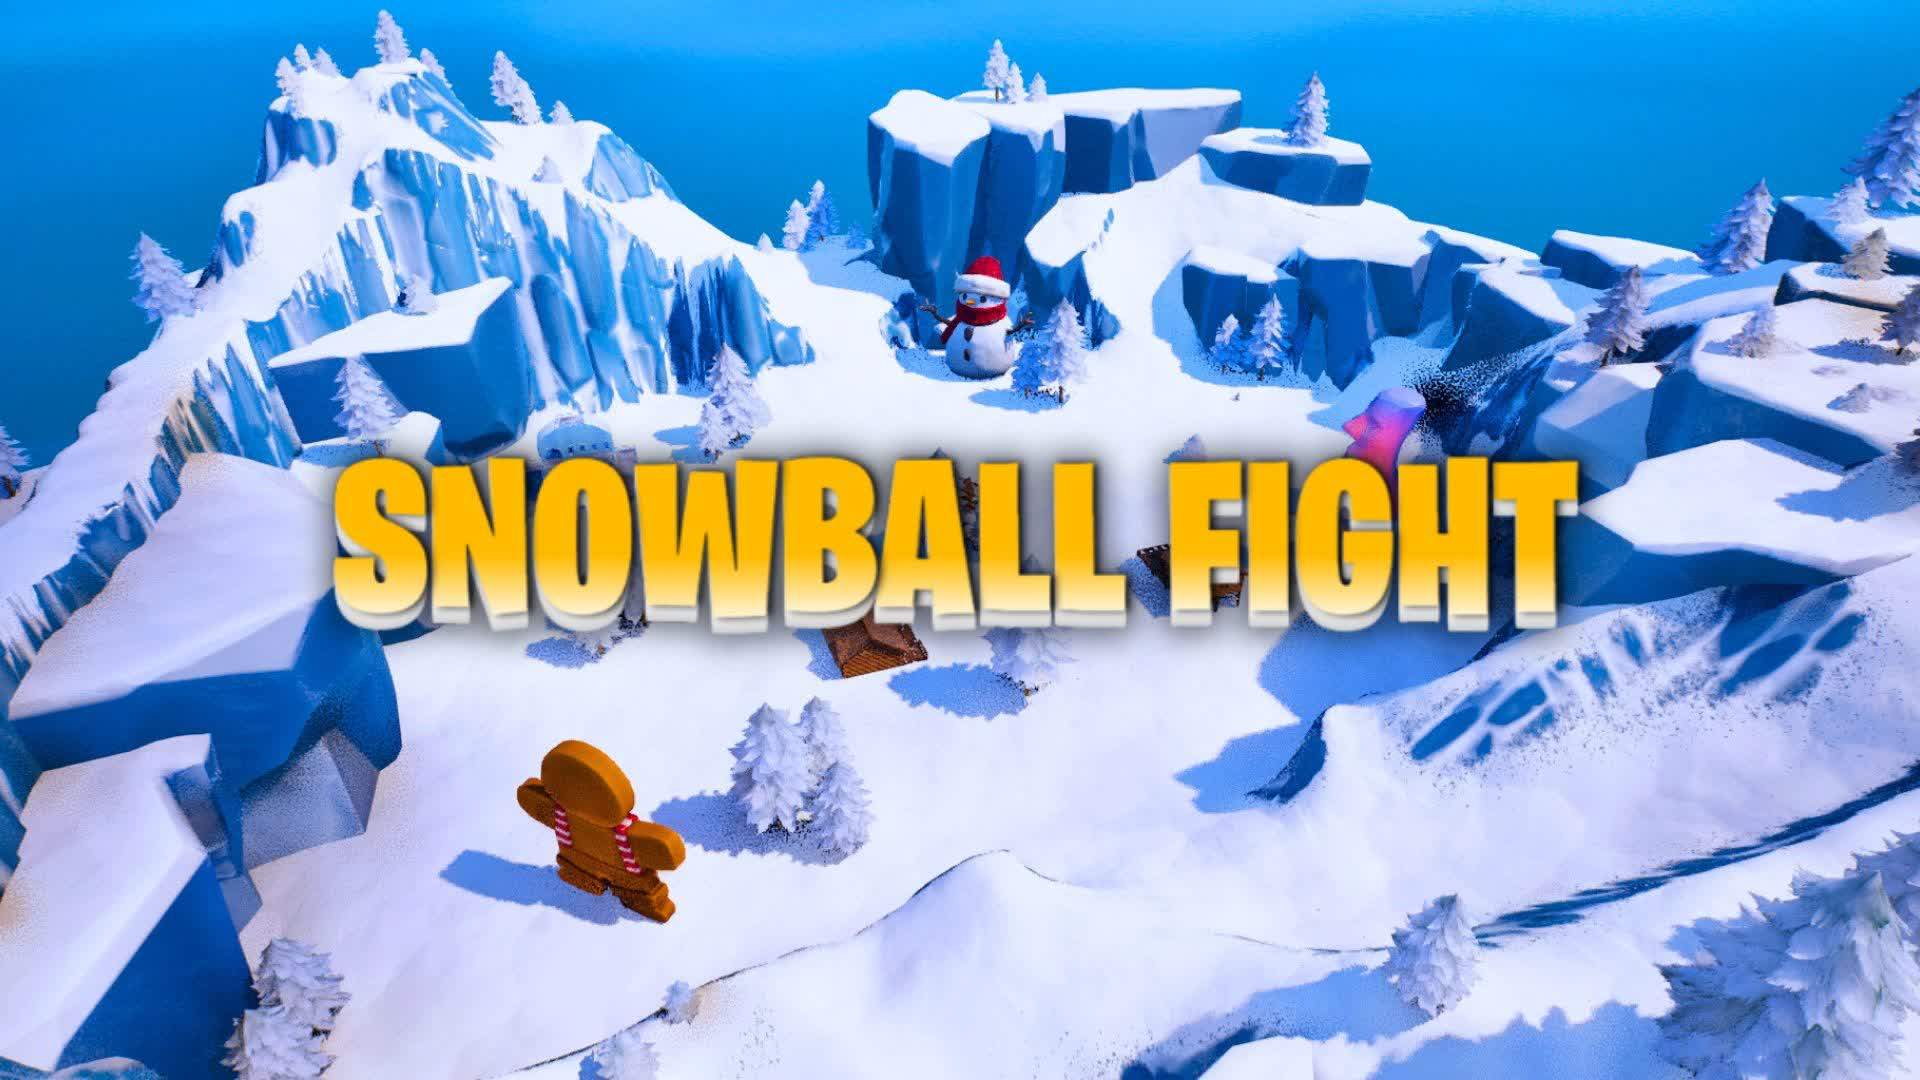 SNOWBALL FIGHT